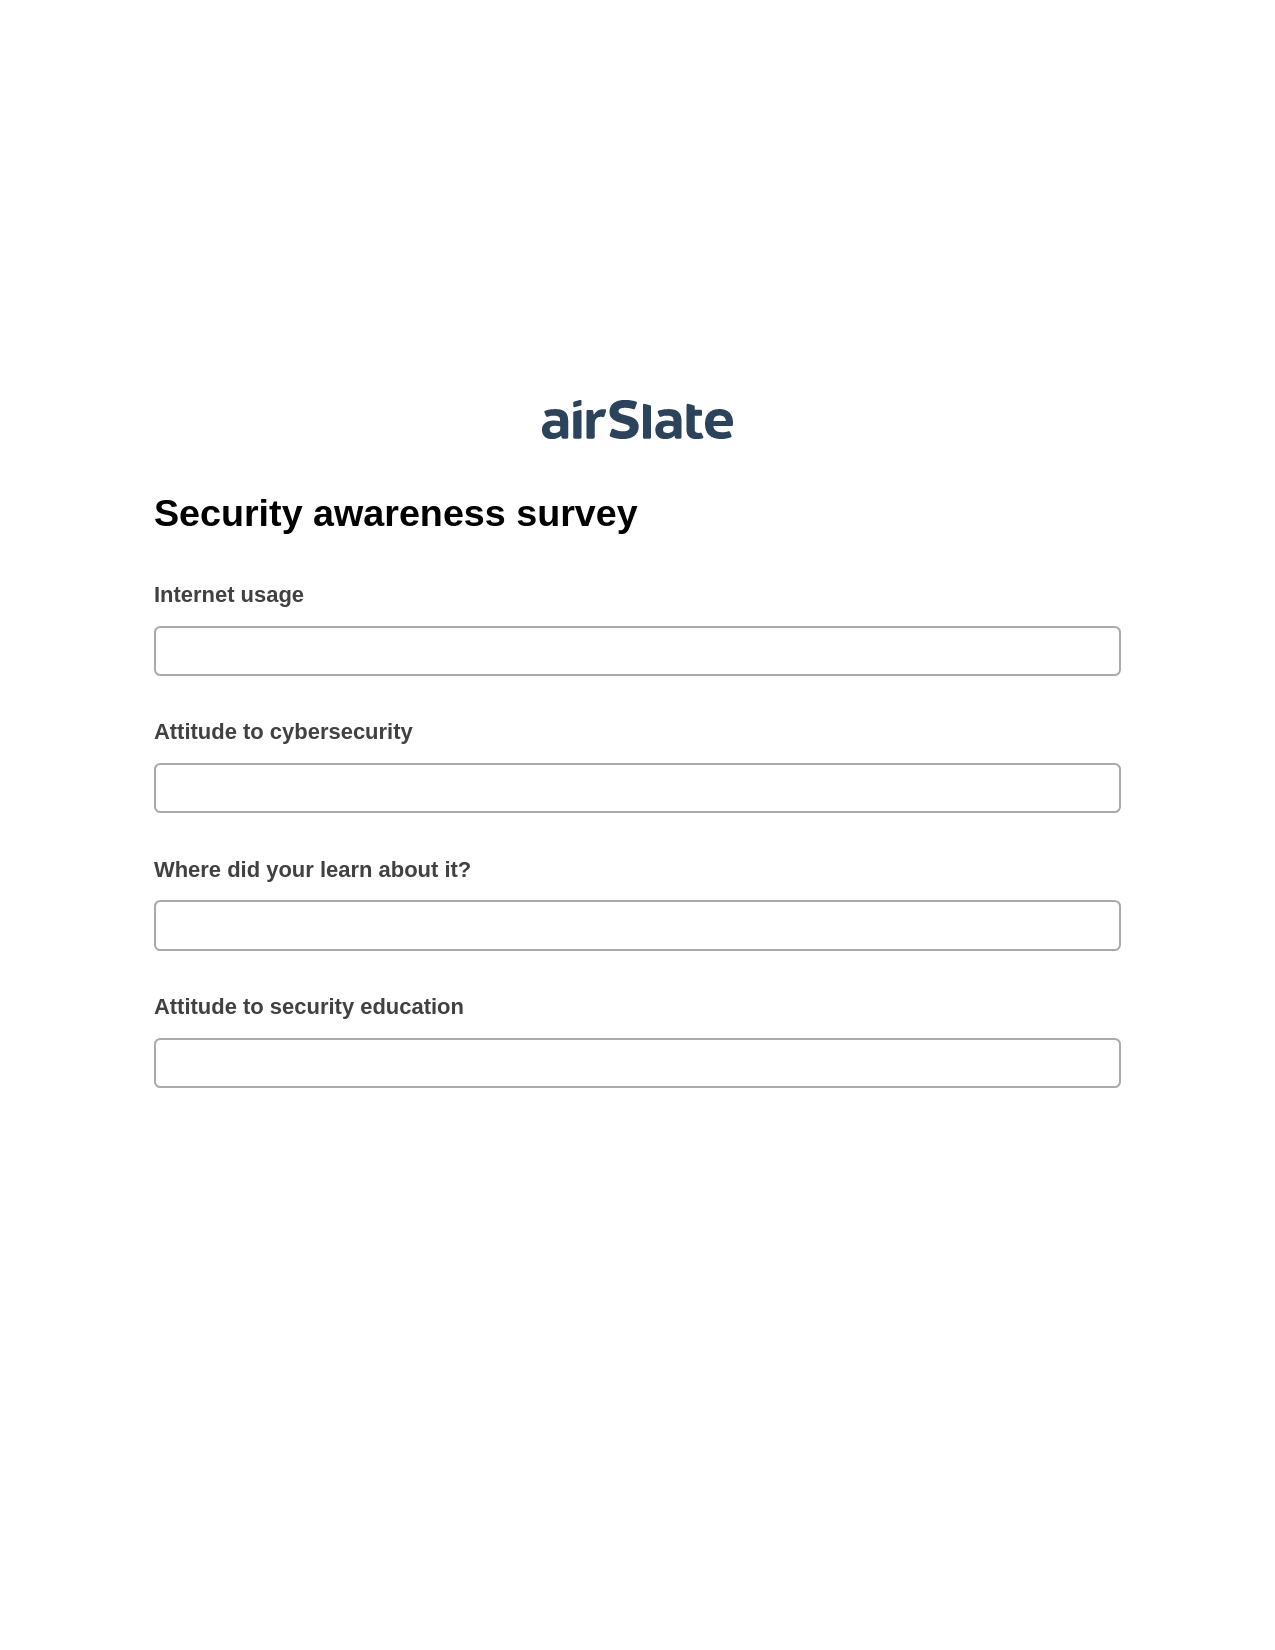 Security awareness survey Pre-fill Document Bot, SendGrid send Campaign bot, Archive to SharePoint Folder Bot